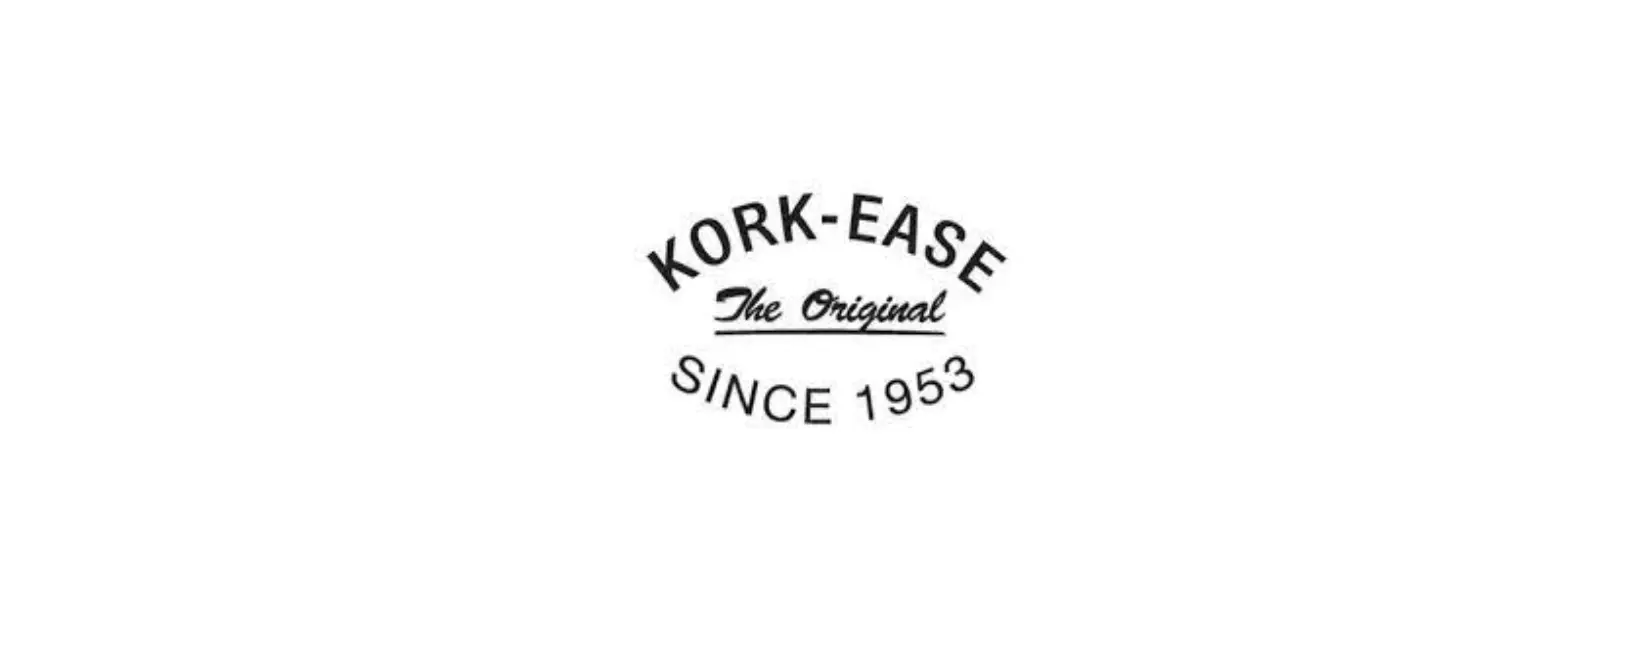 Kork-Ease Discount Code 2022